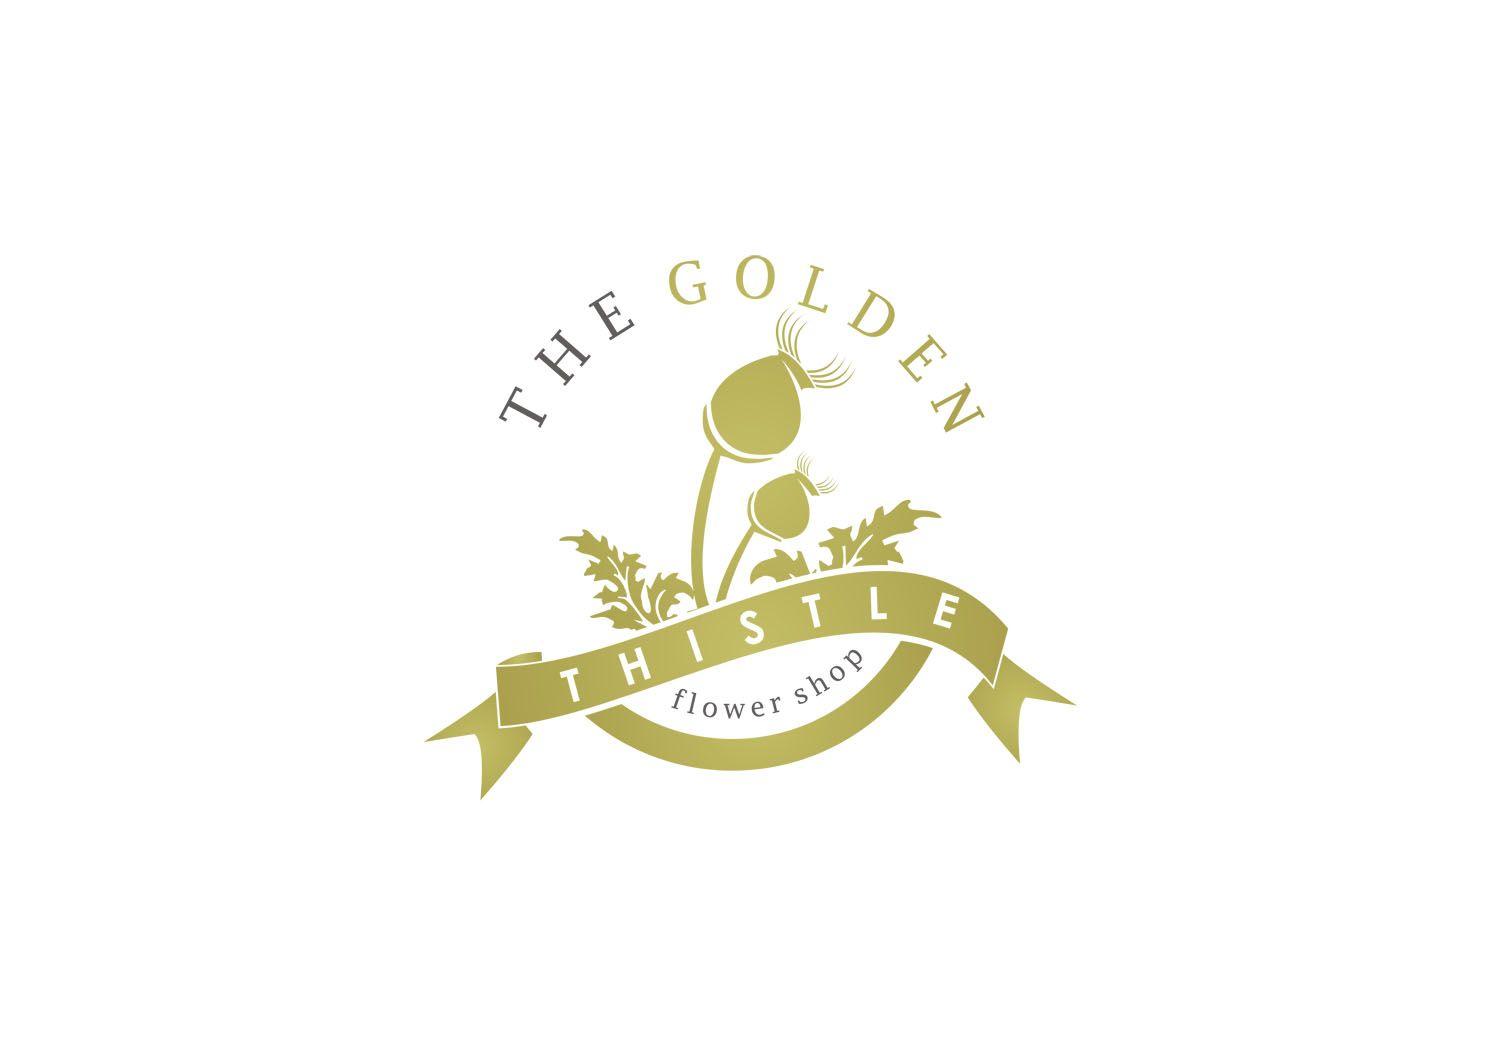 Gold Flower Company Logo - Elegant, Traditional, Florist Logo Design for The Golden Thistle